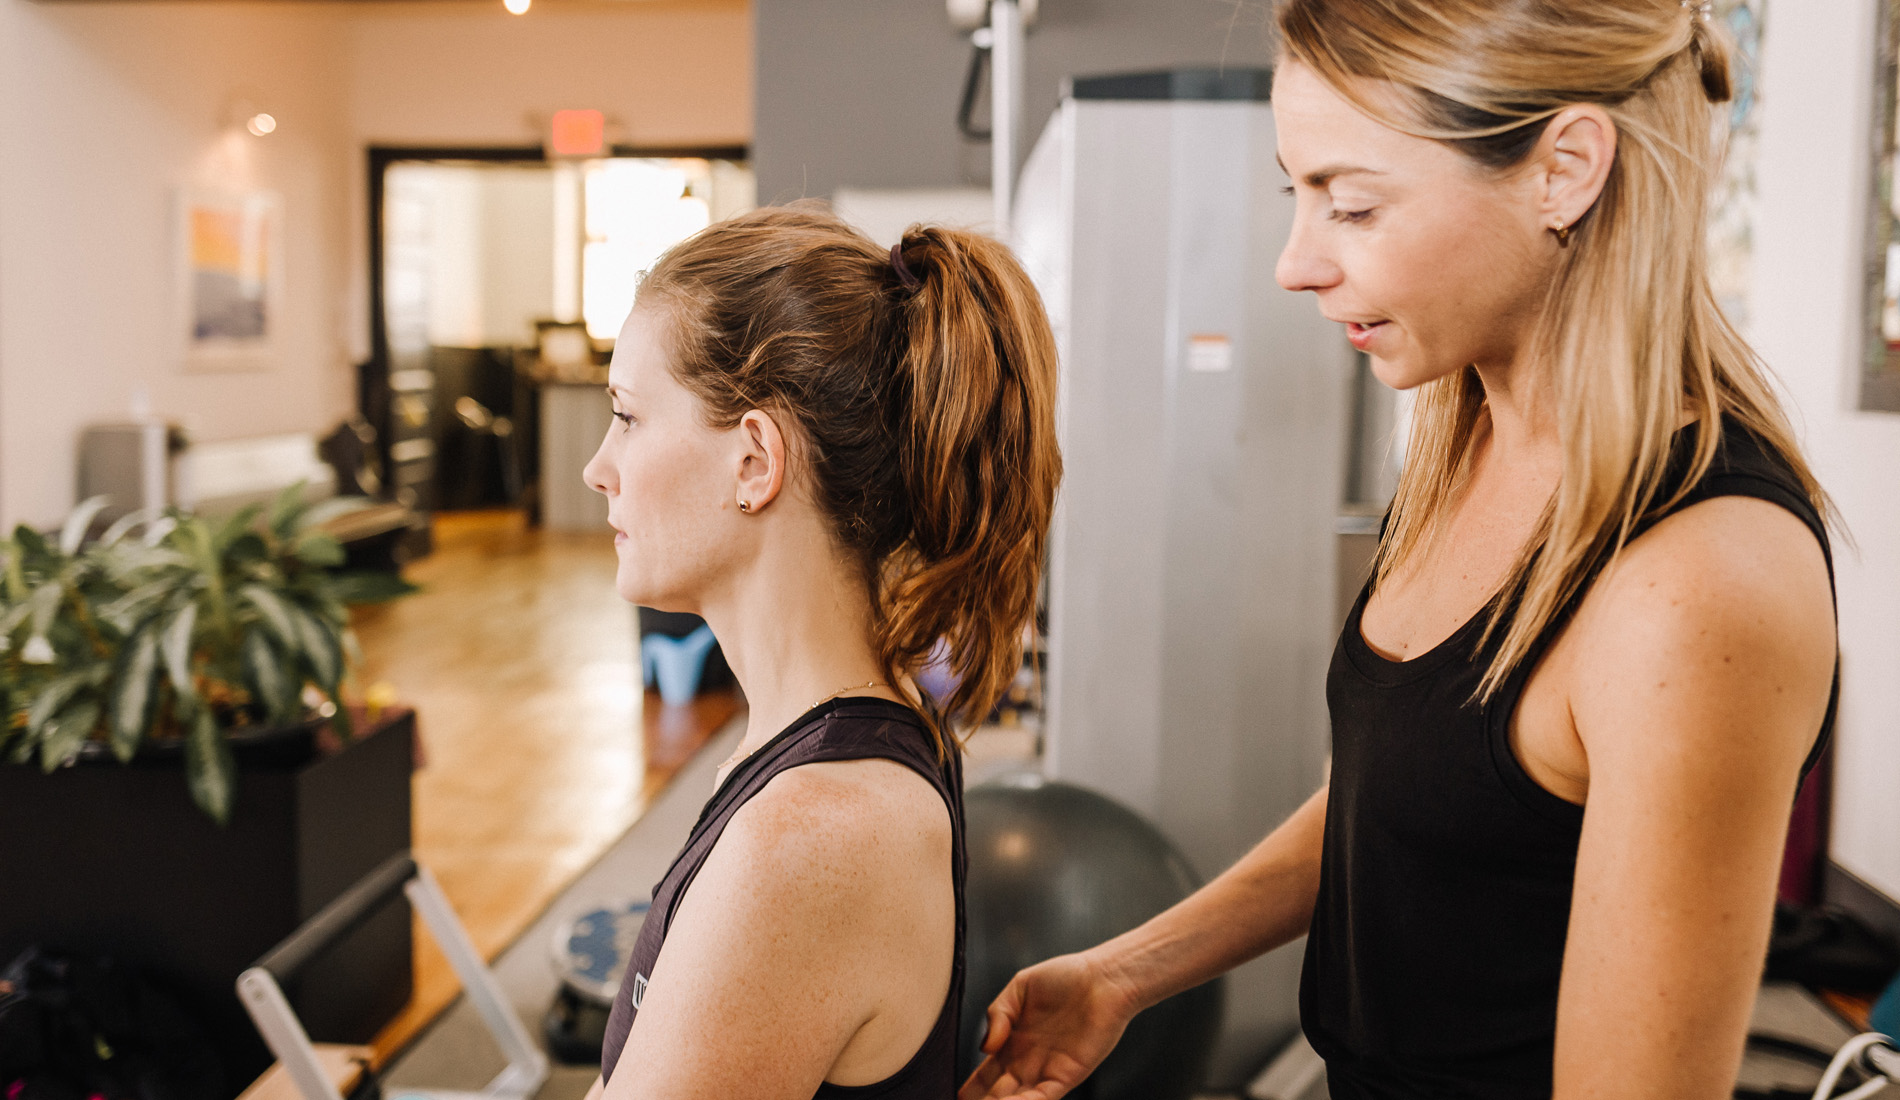 A Sanctuary Body pilates instructor adjusts her client's posture